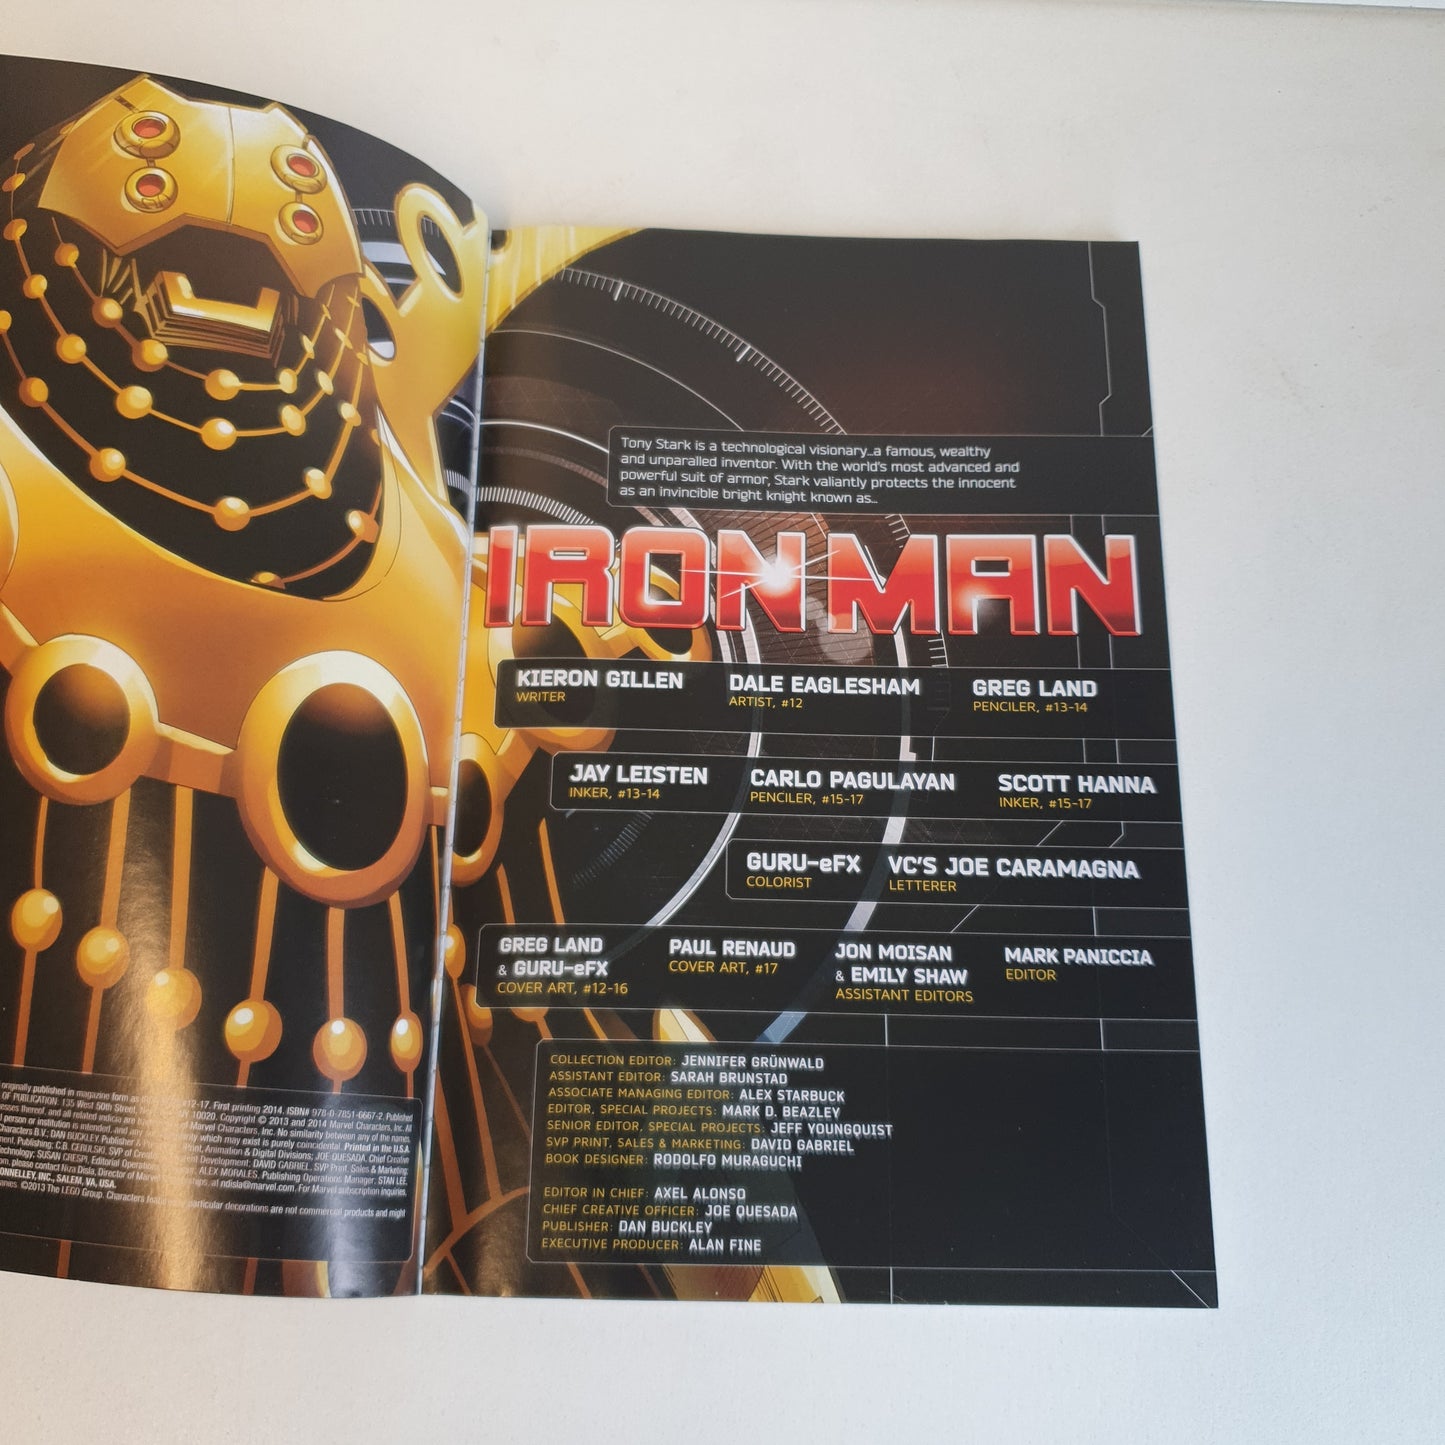 Iron Man The Secret Origin of Tony Stark Book 2 by Gillen, Eaglesham, Land & Pagulayan (2014)